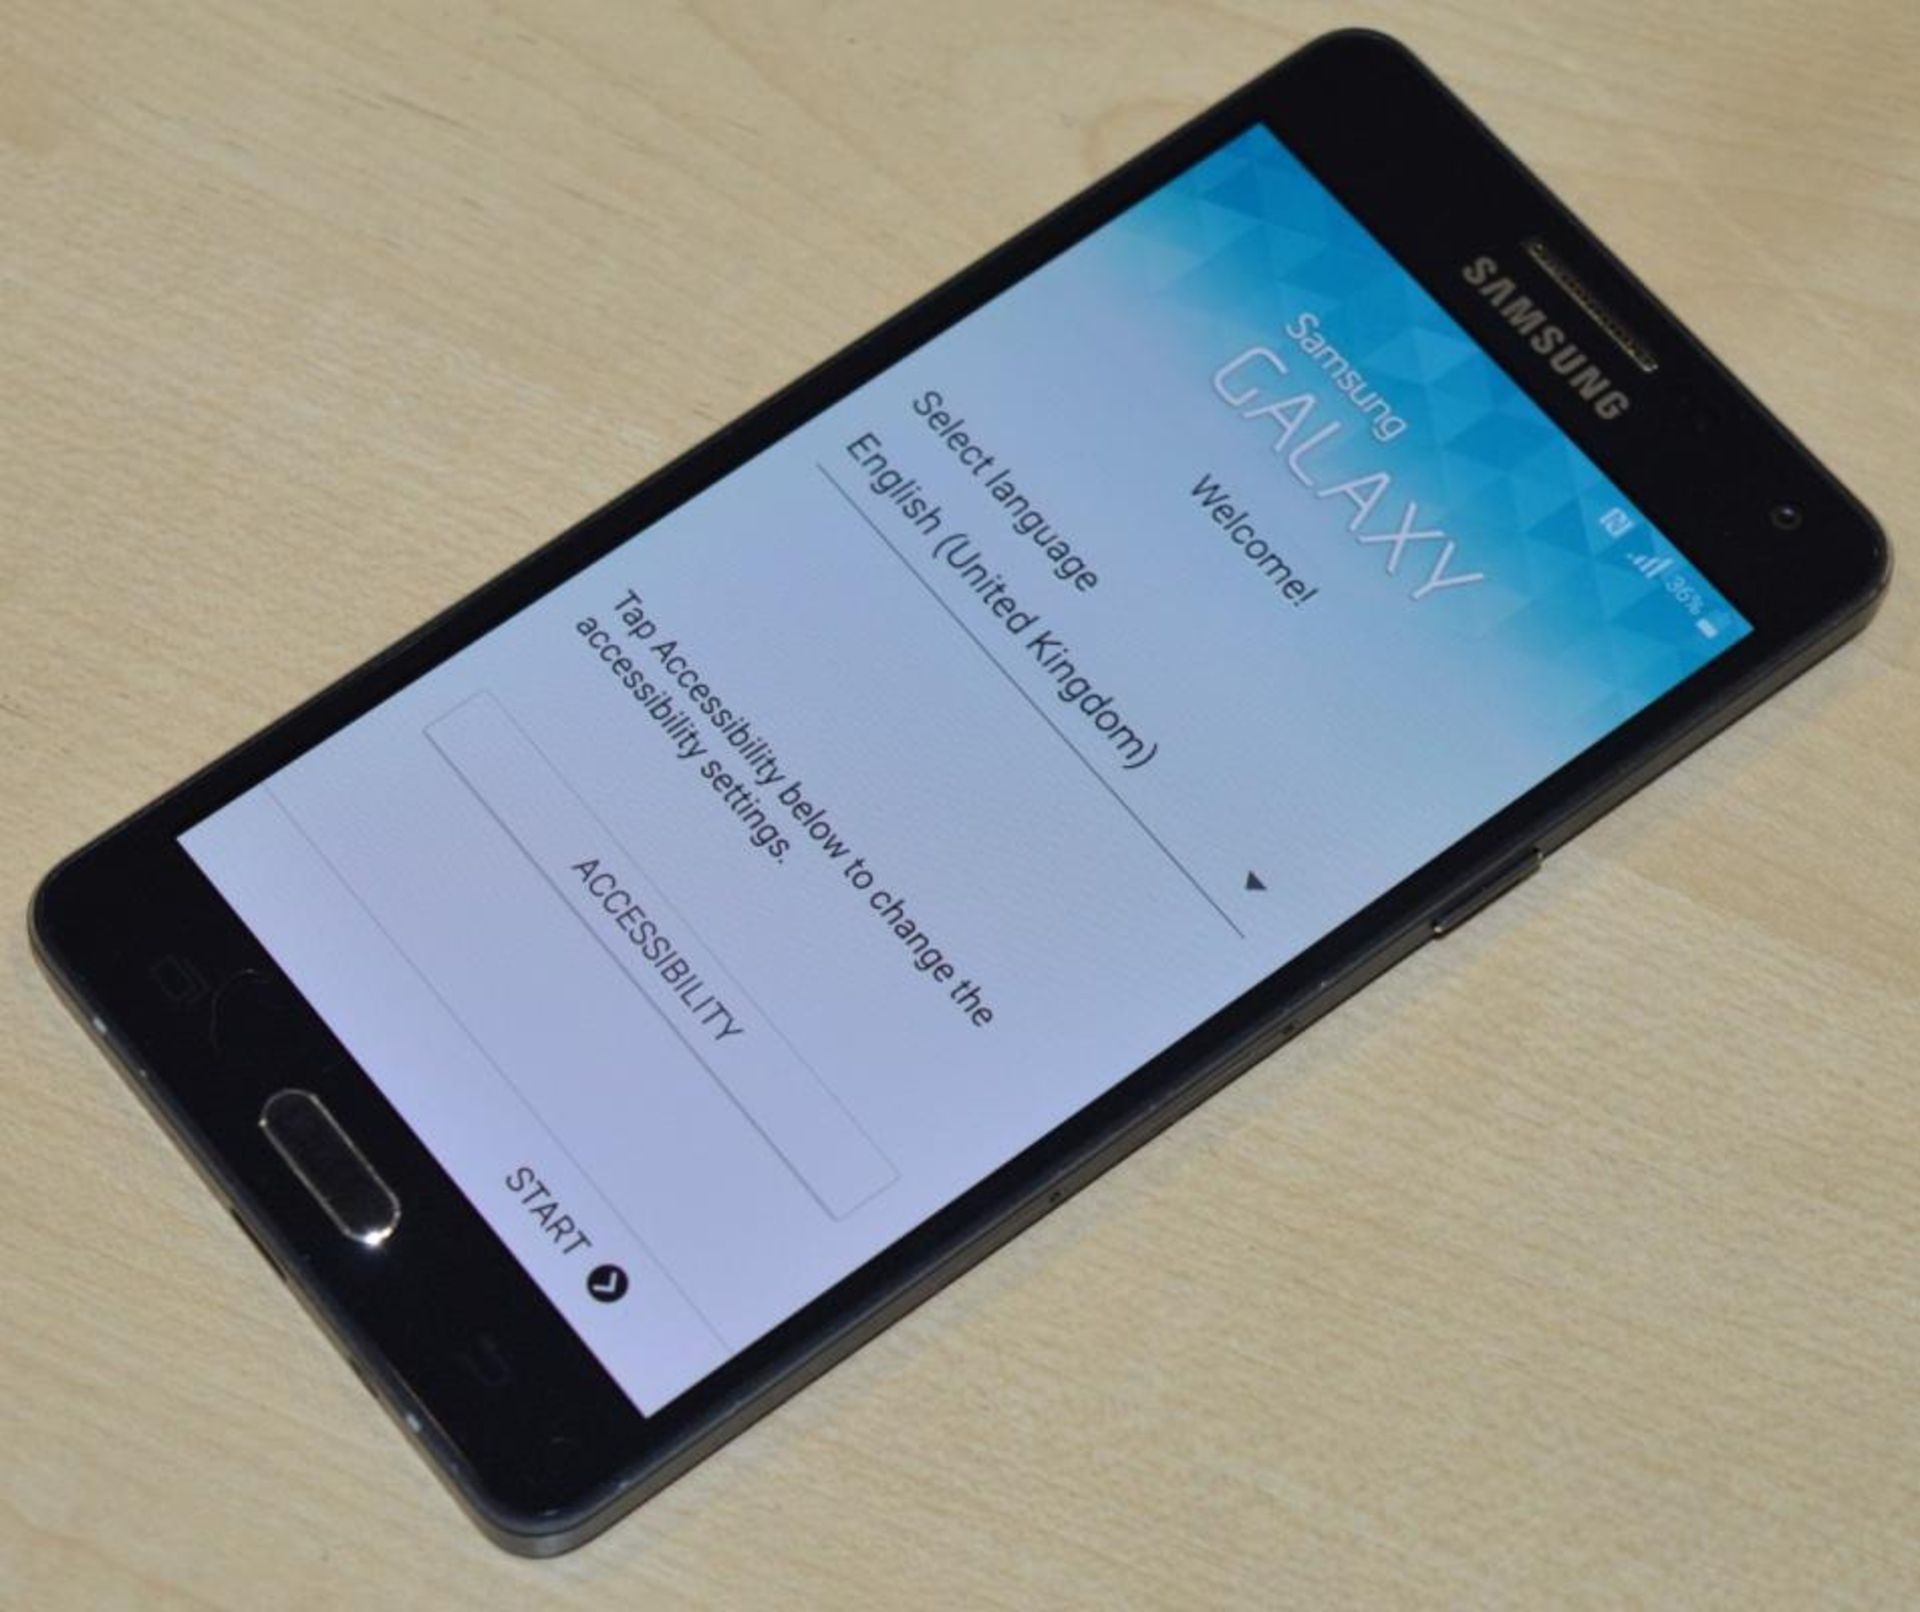 1 x Samsung Galaxy A5 16gb Smart Phone - Model SM-A500FU - Midnight Black - CL285 - Ref J0000 -